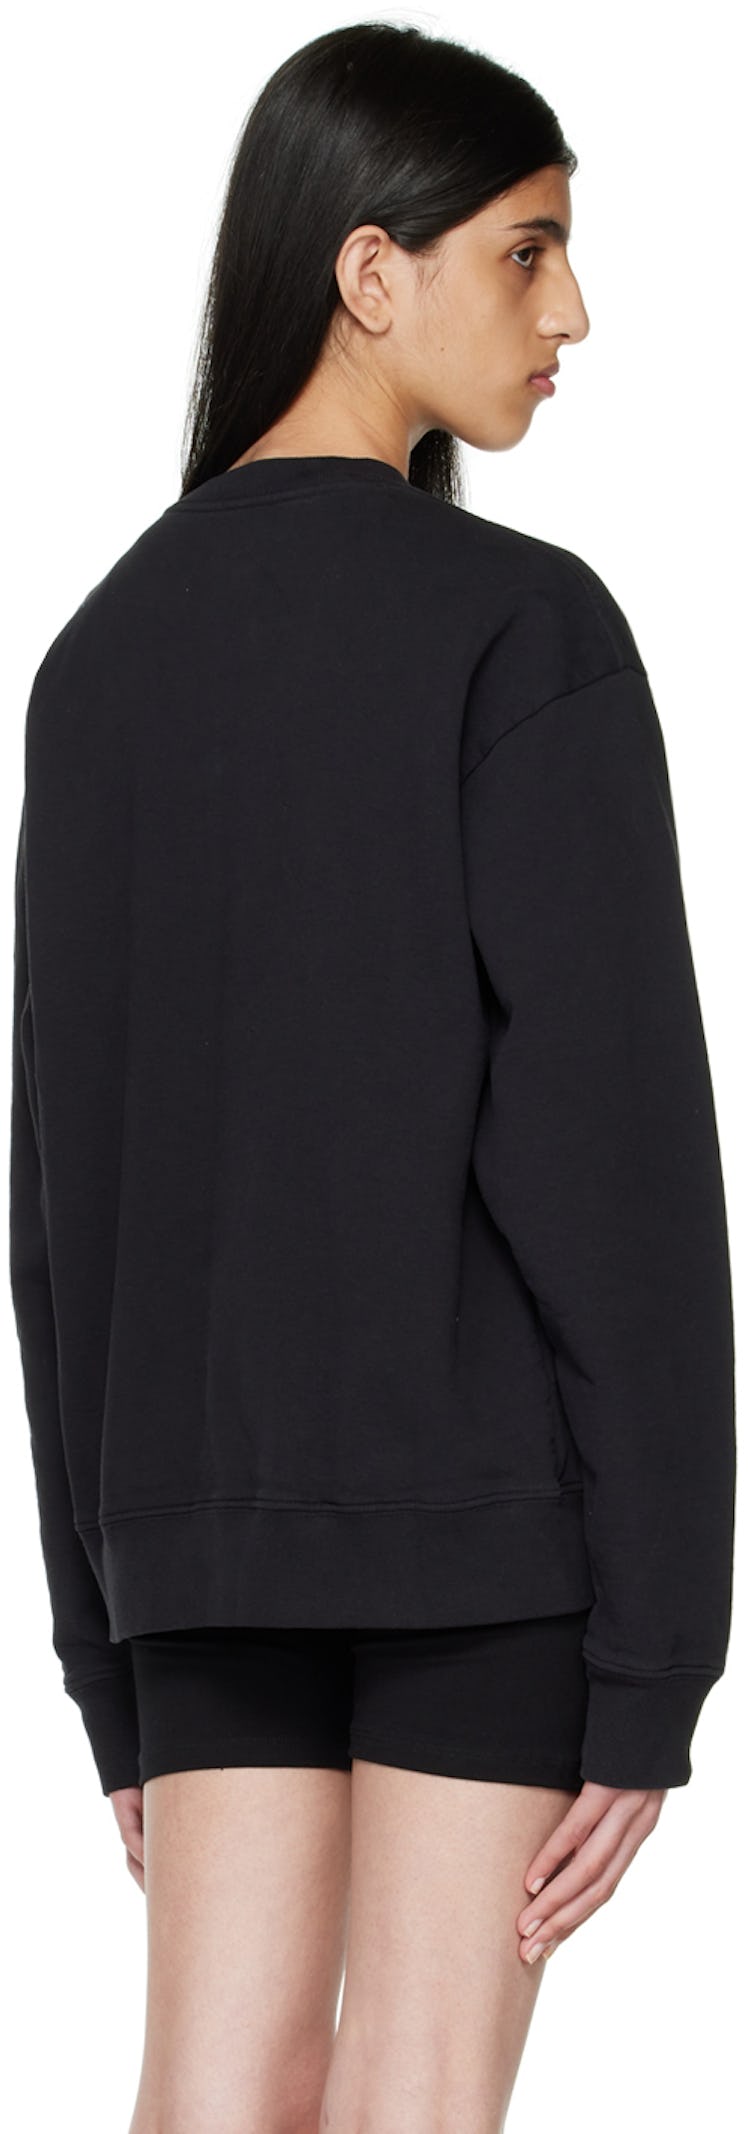 Black Cotton Sweatshirt: additional image